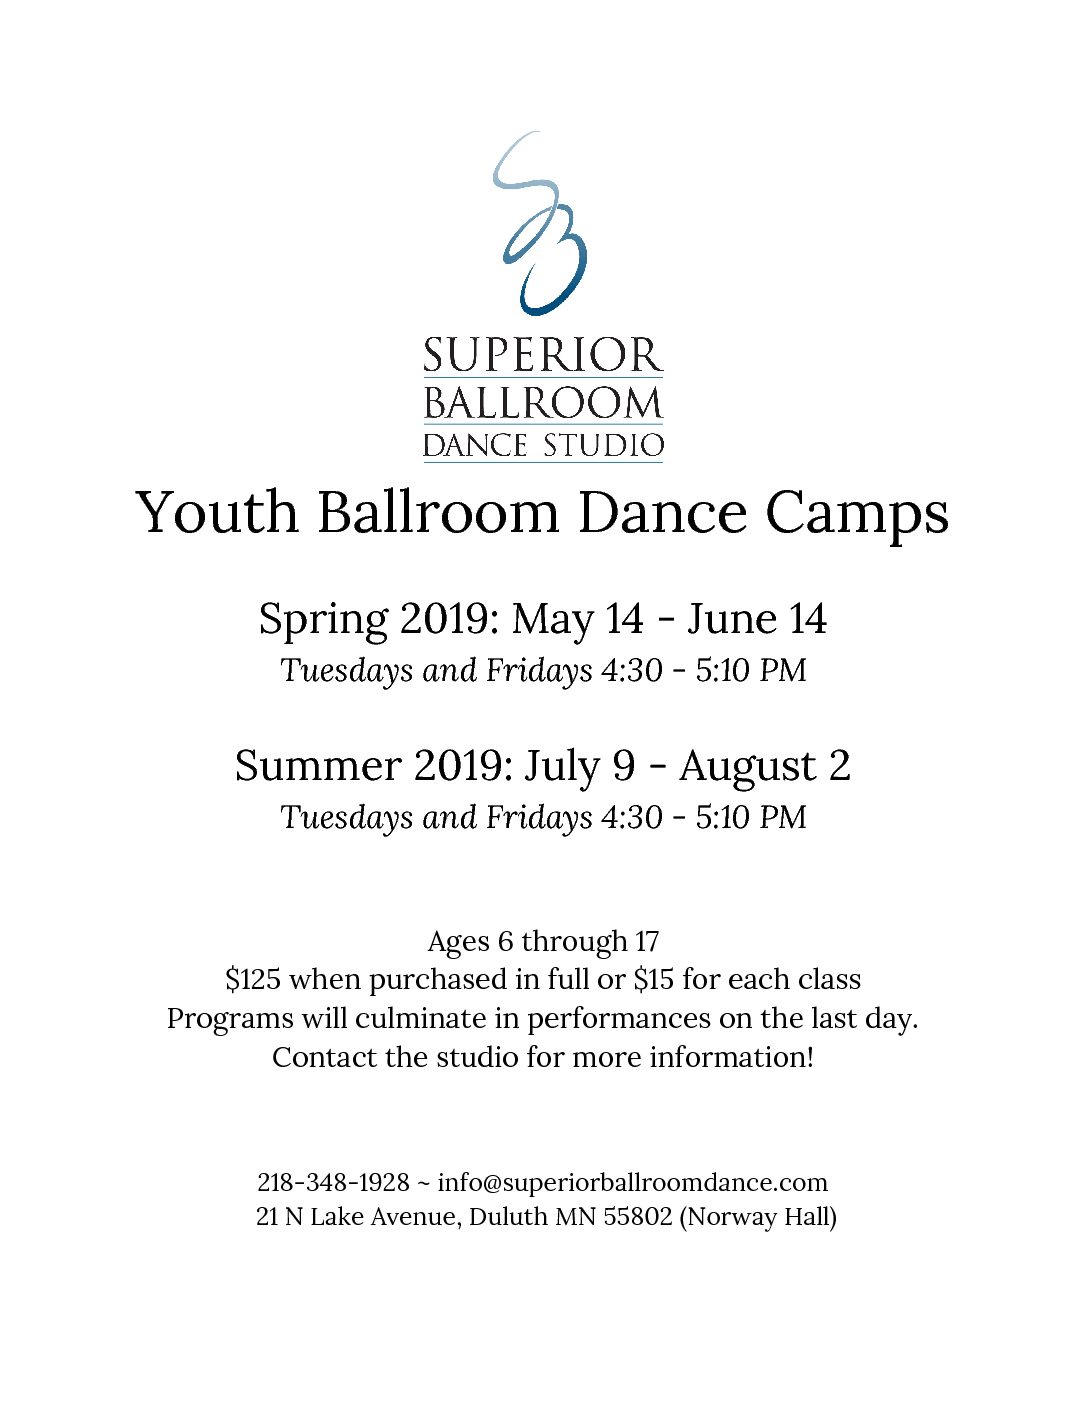 Youth Dance Camps Superior Ballroom Dance Studio